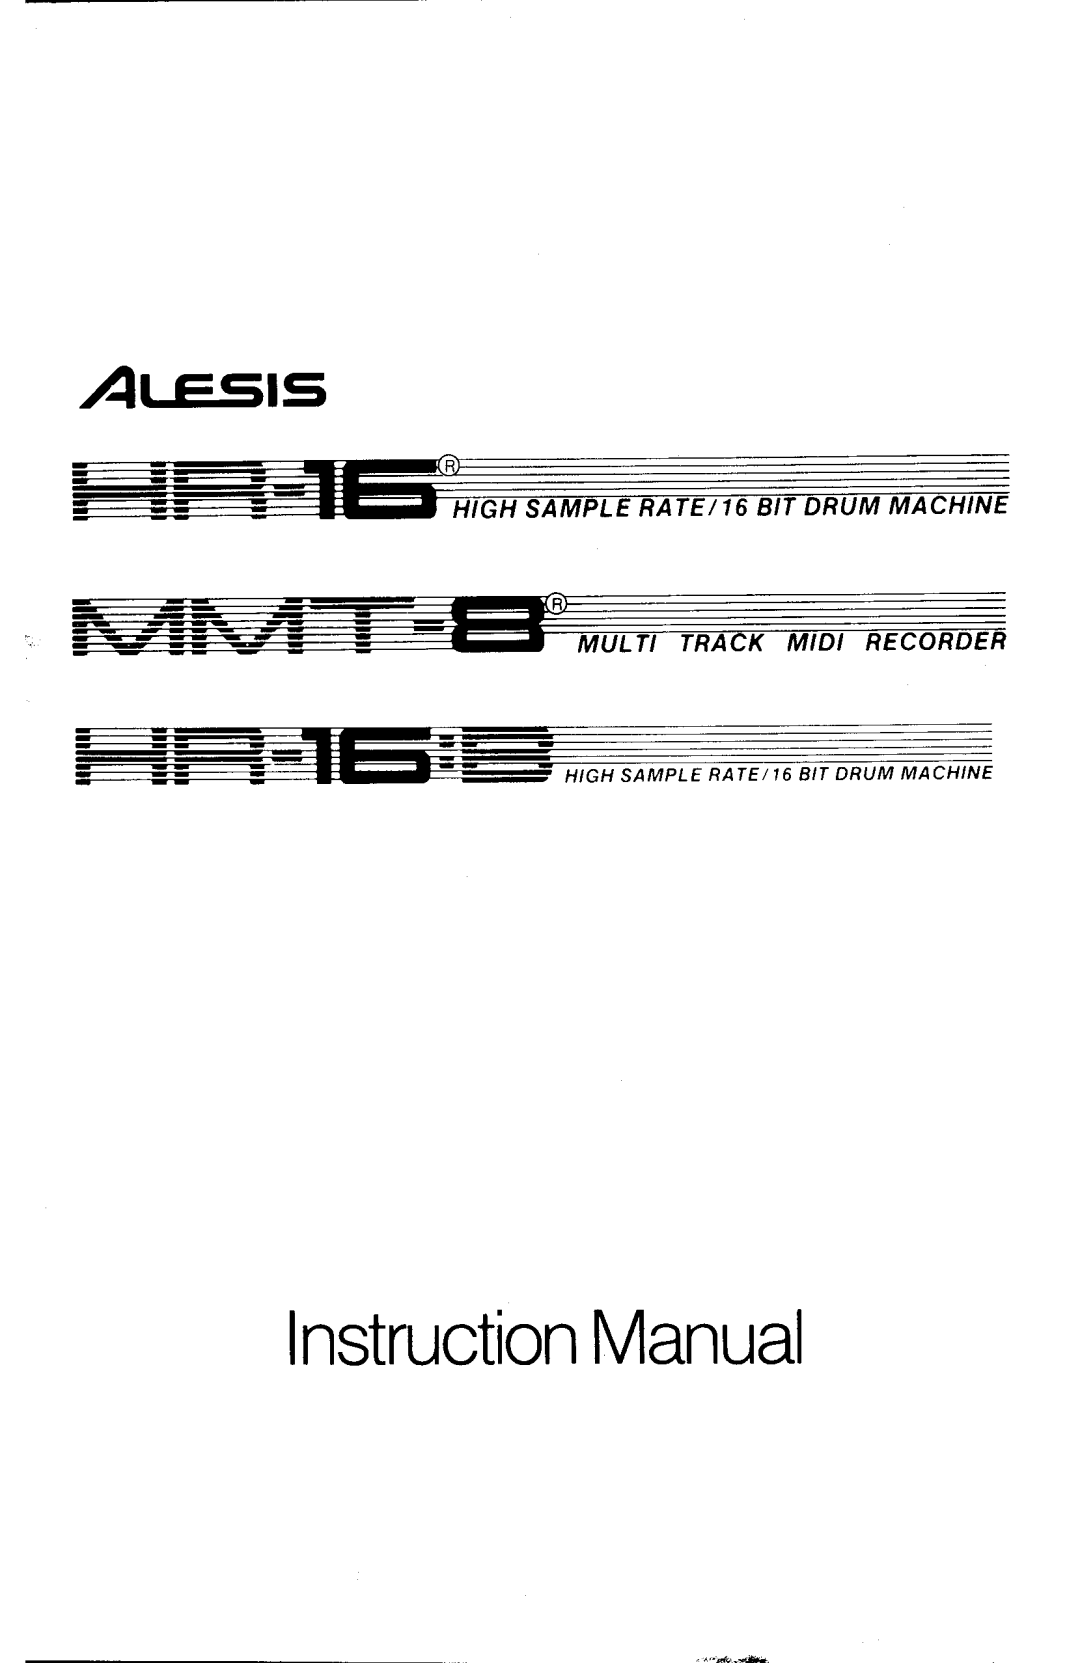 Alesis manual ALESIS MMT-8, Multi track MIDI recorder 